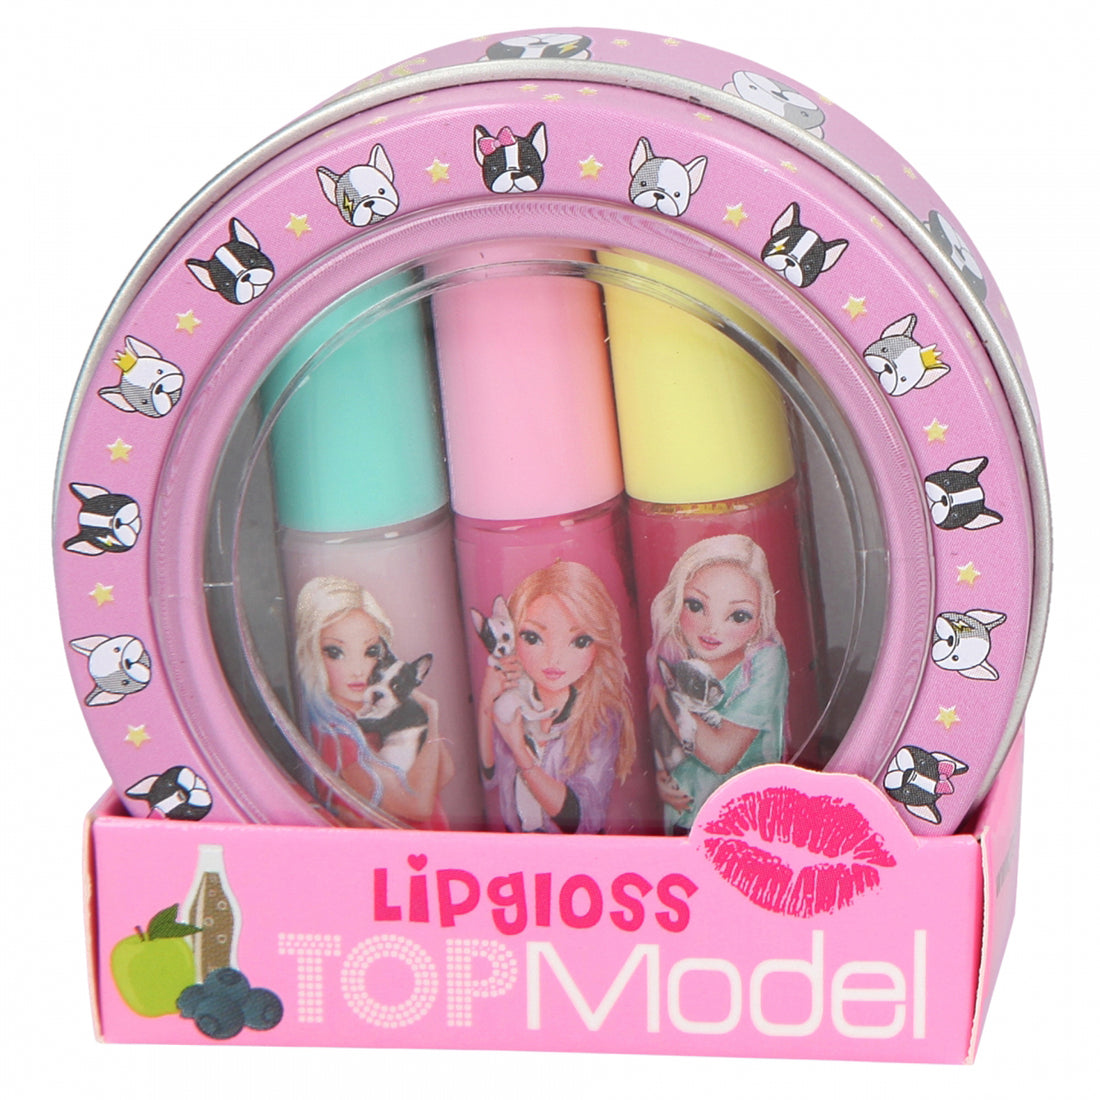 depesche-topmodel-mini-lipgloss-set- (1)